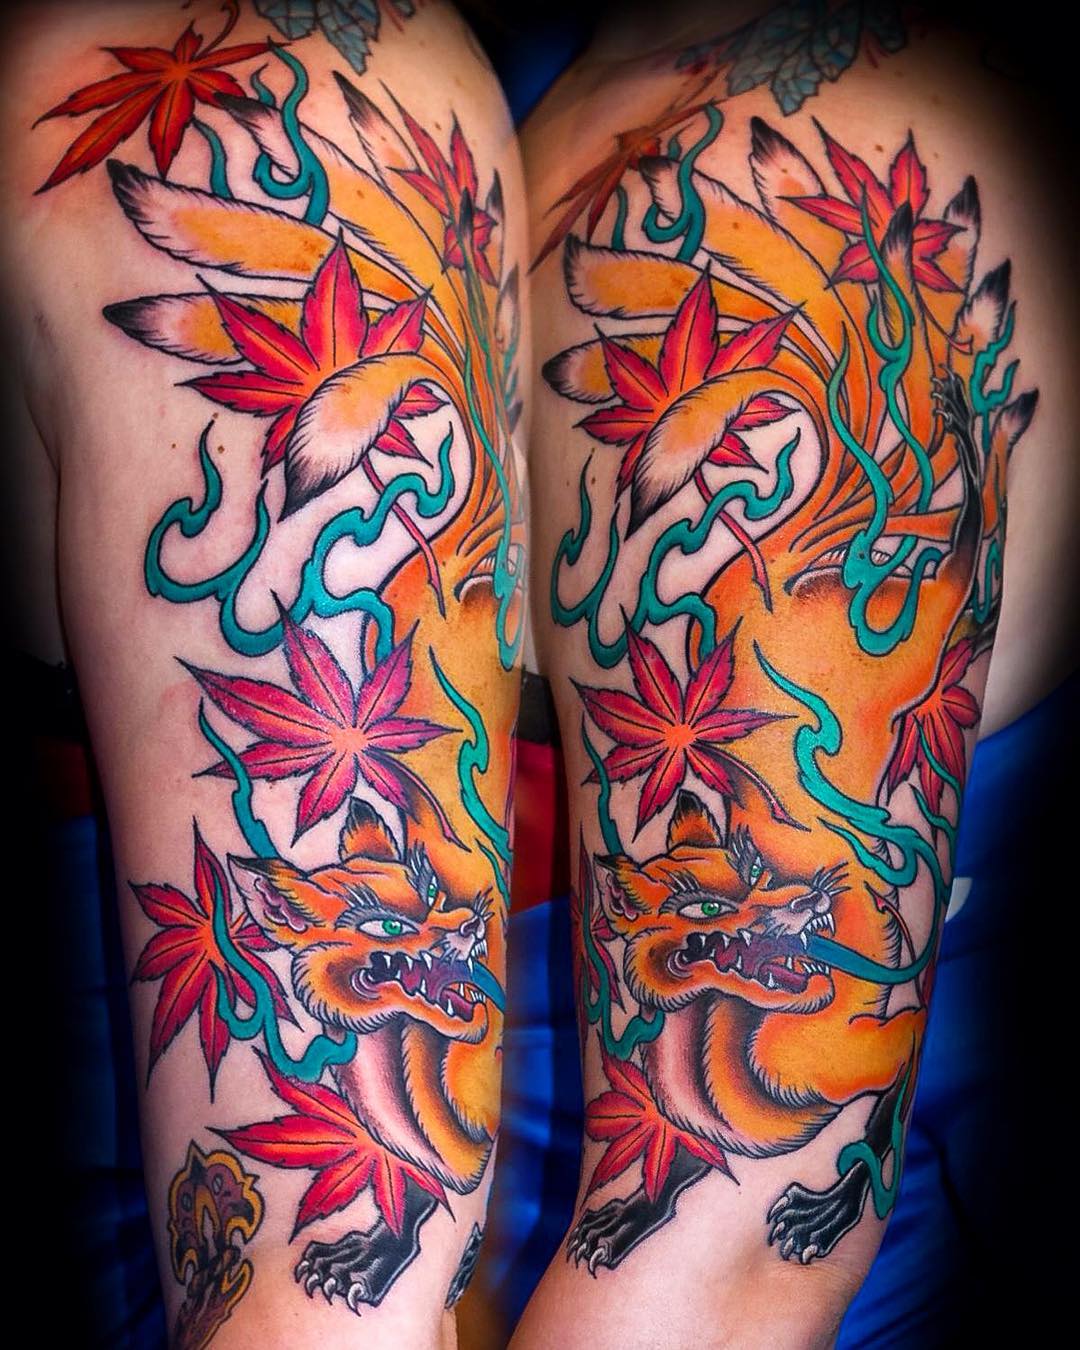 Kitsune on @julietta_ustenco, partly healed, partly fresh

#tattoo #tattooing#ta...